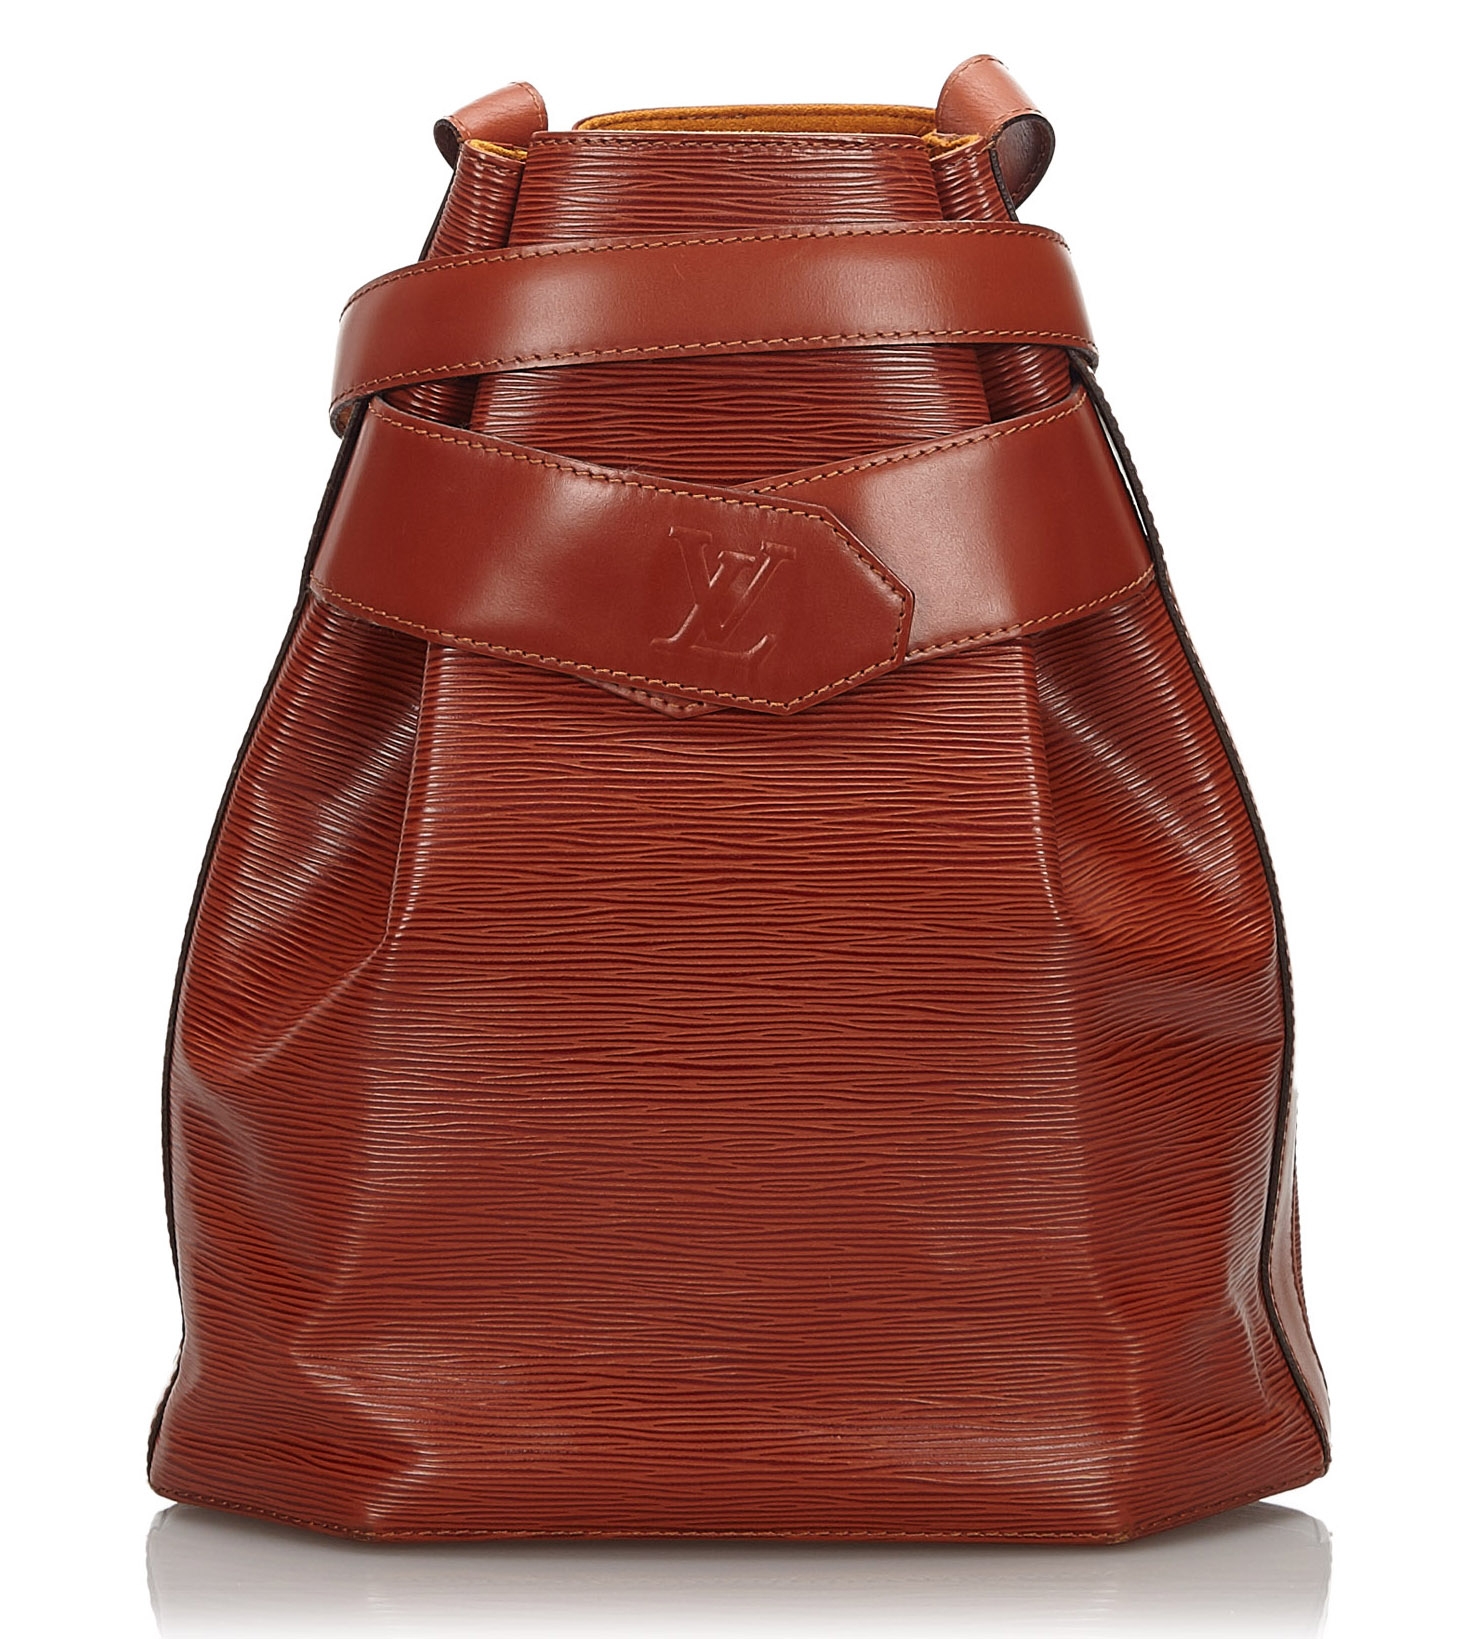 Louis Vuitton Vintage - Epi Sac Depaule Bag - Red - Leather and